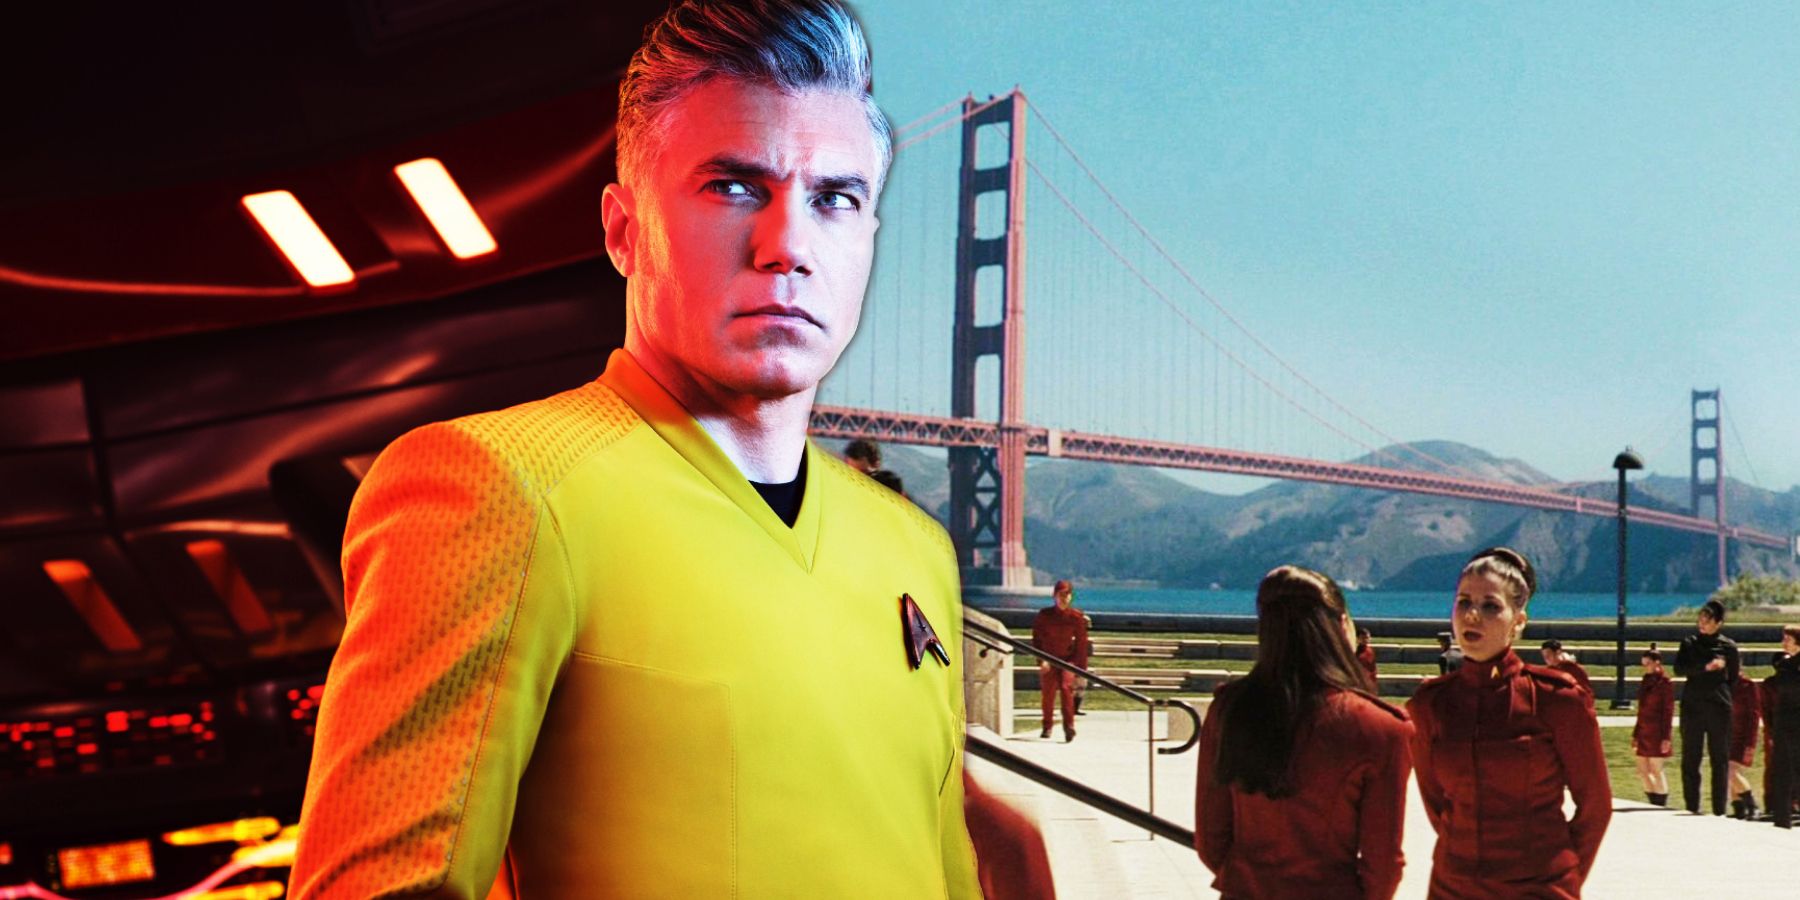 Anson Mount as Captain Pike standing next to Starfleet Academy